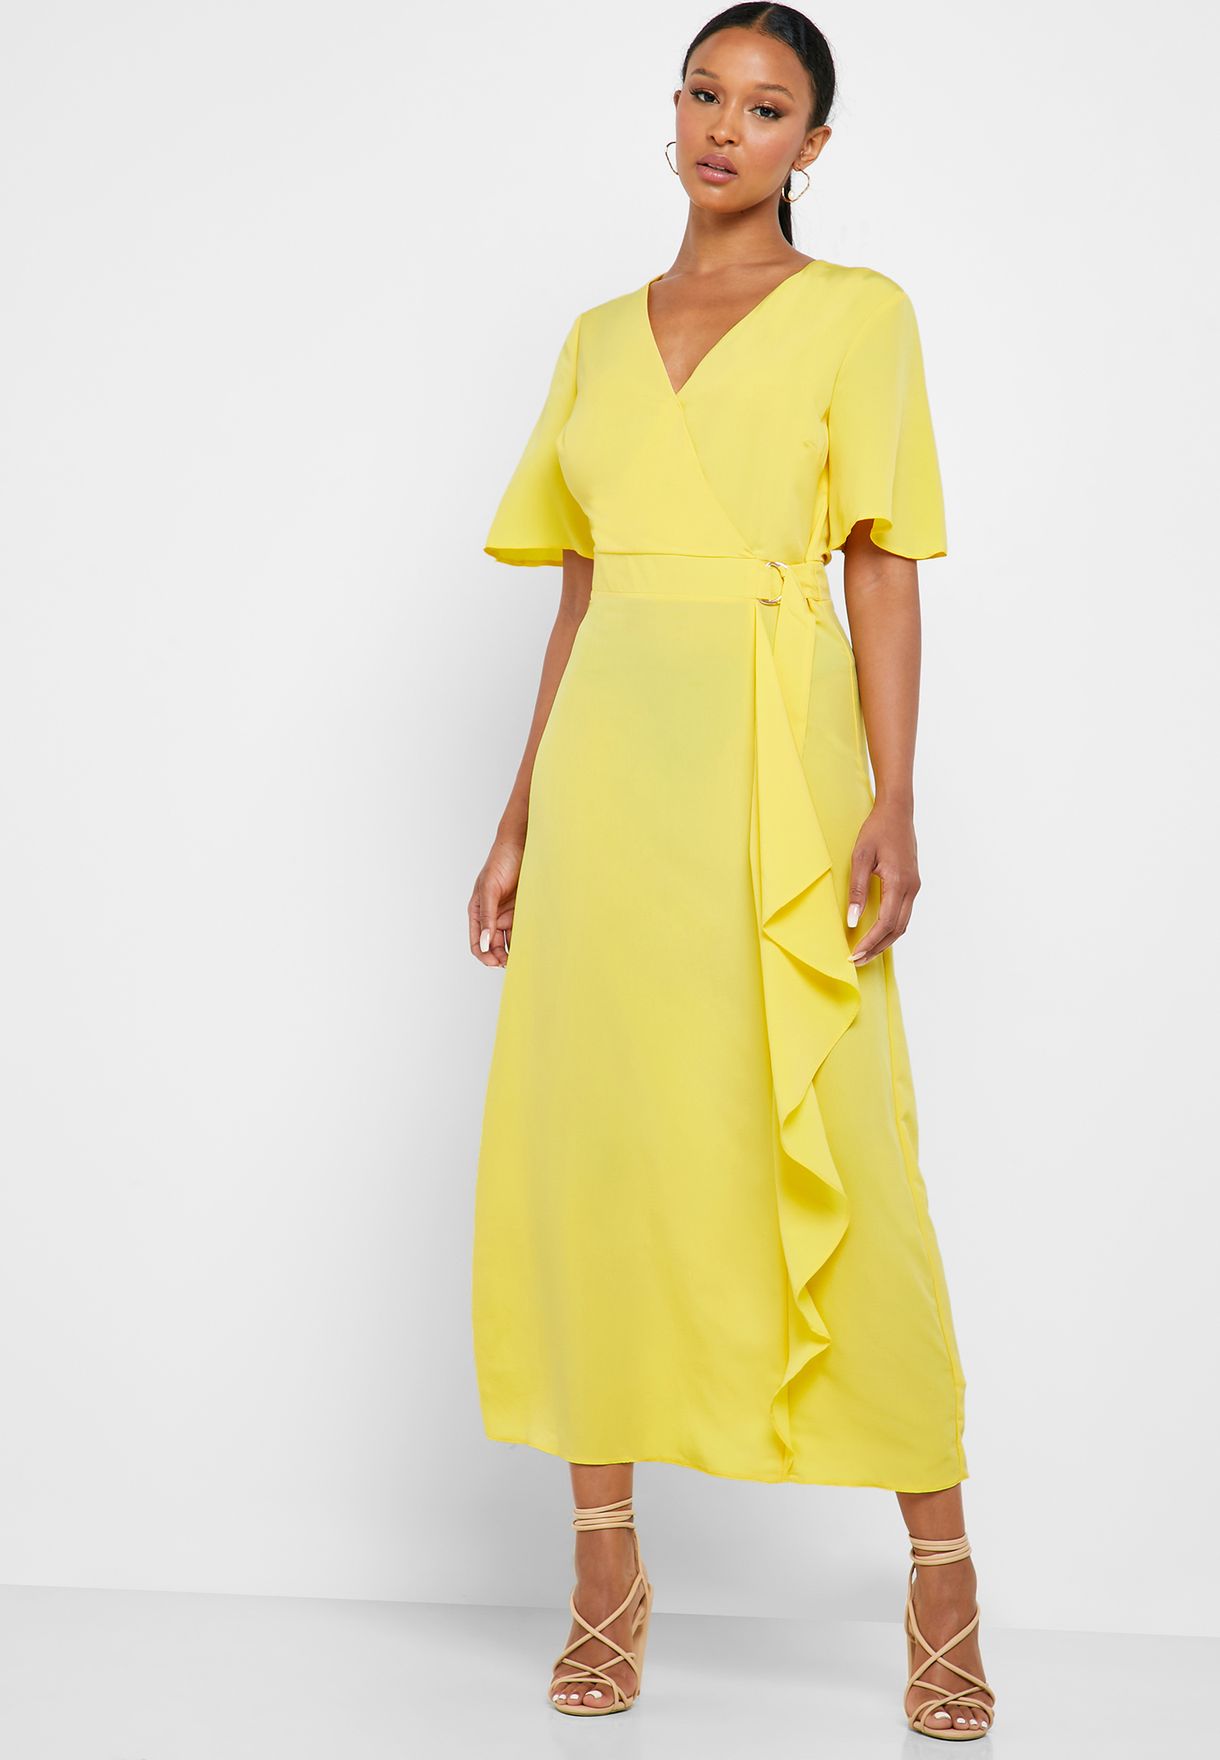 buy yellow dress